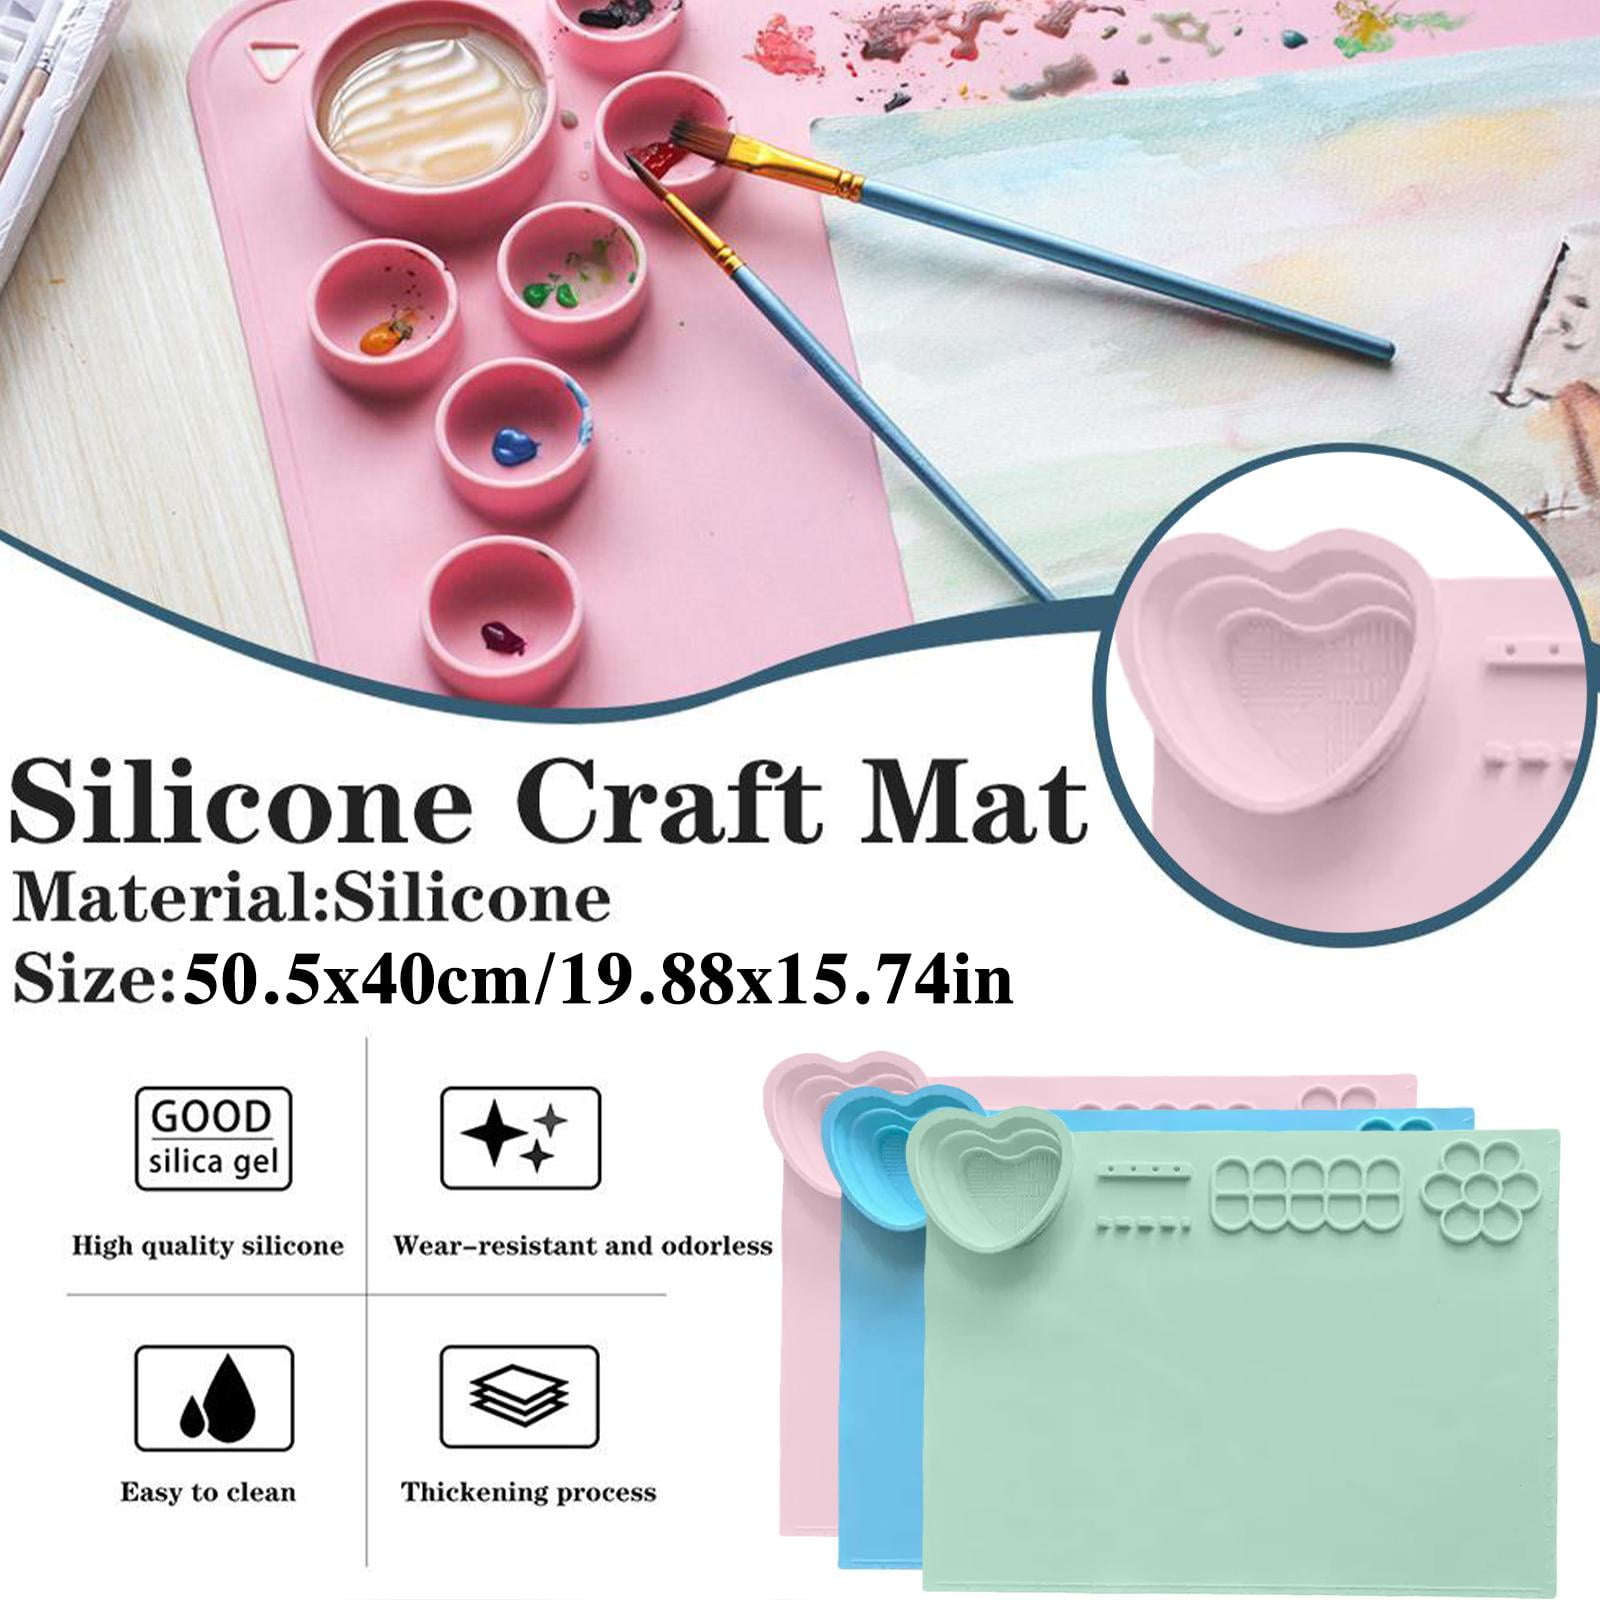 Silicone Craft Mat